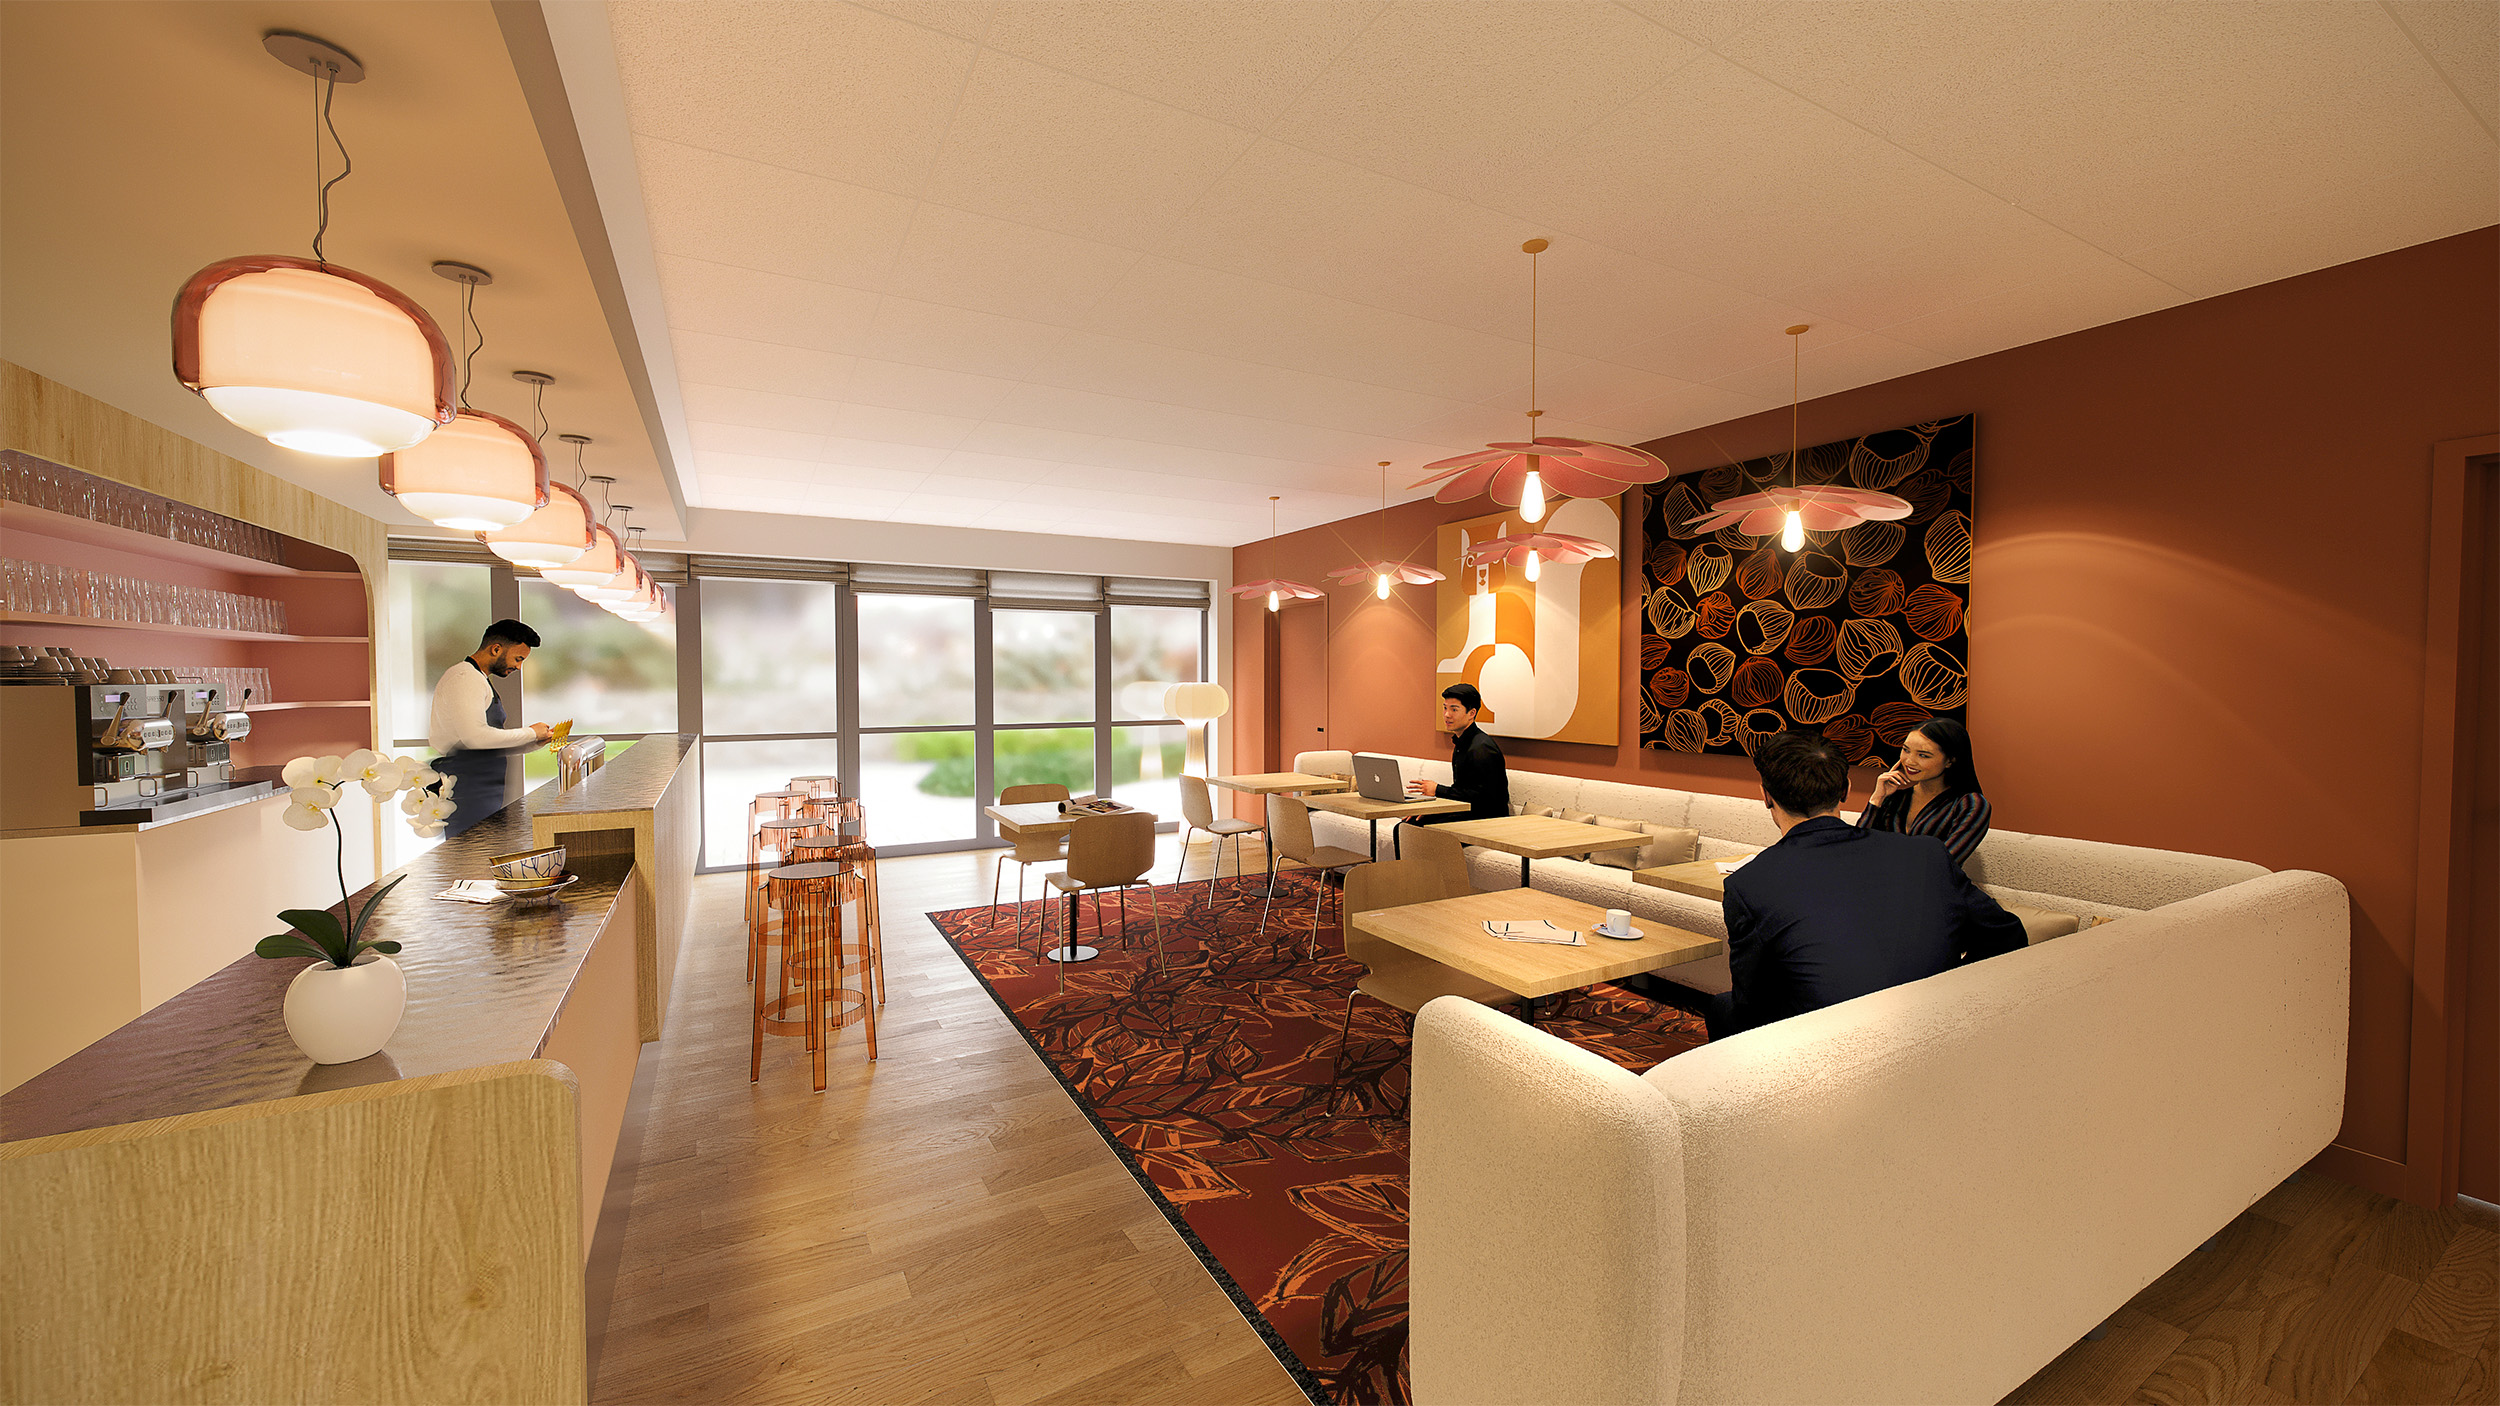 projet-architecture-rebranding-hotel-ibis-styles-contemporain-optiondinterieur